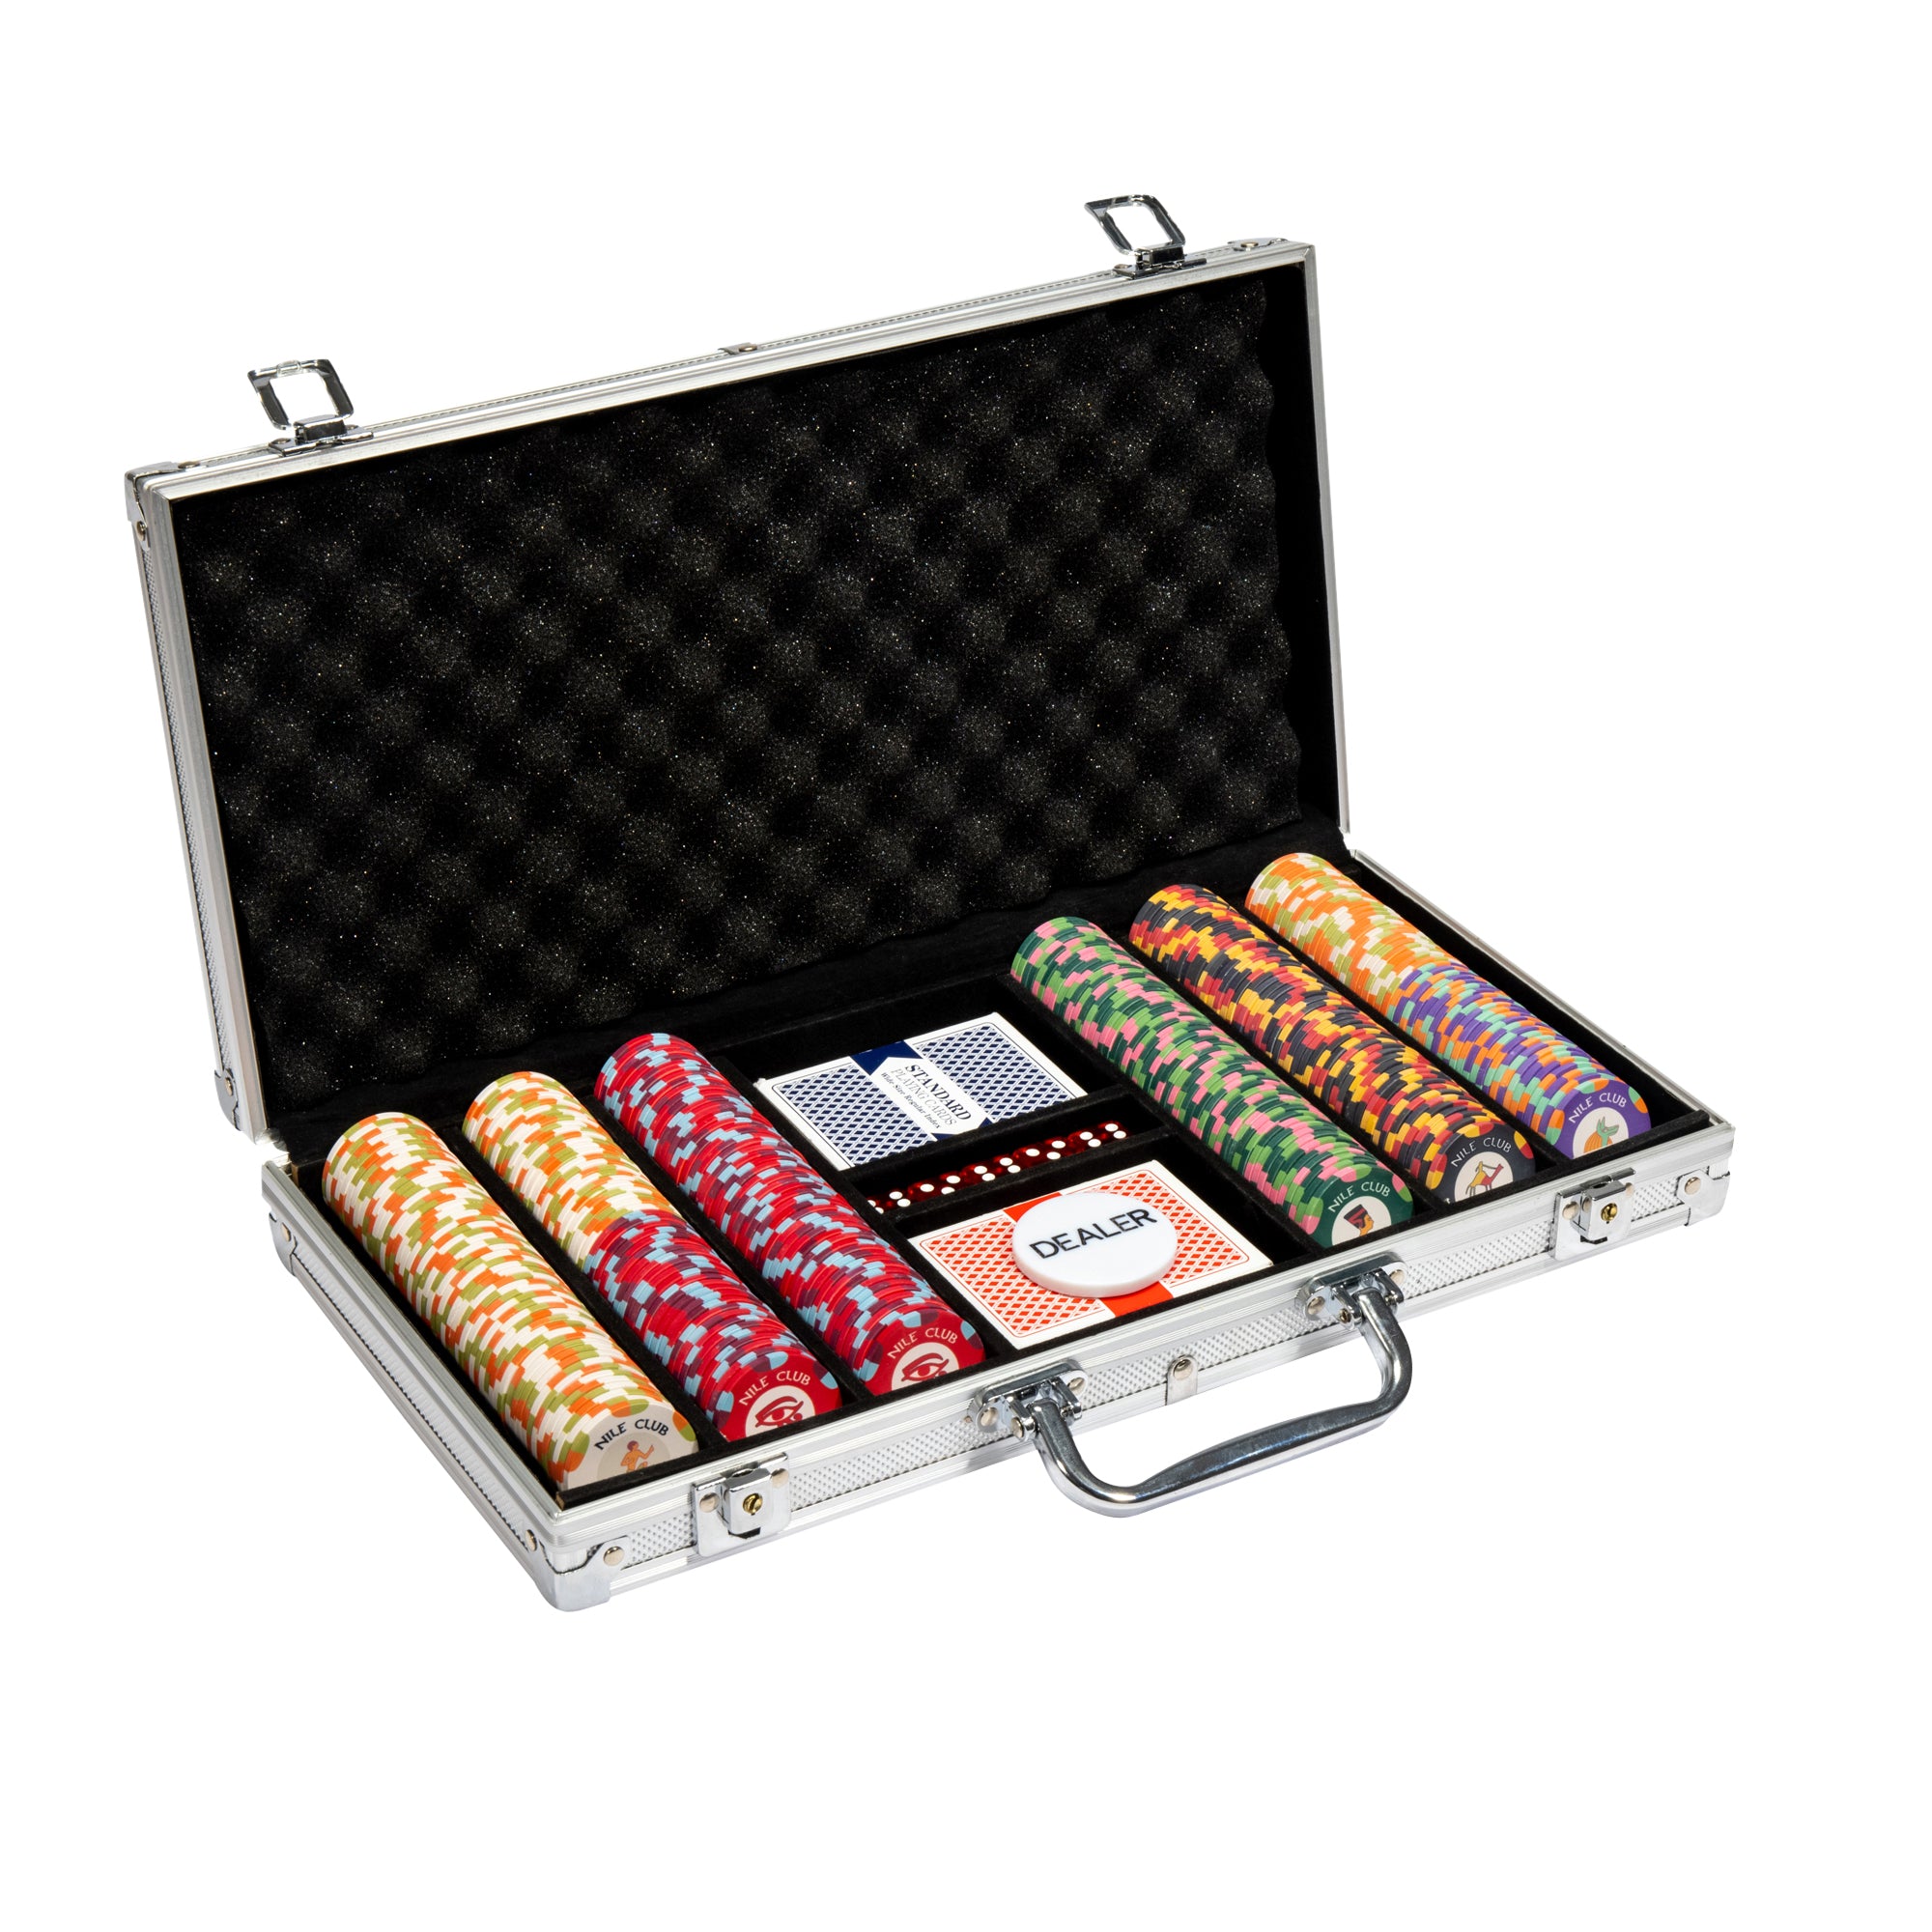 Nile Club 10-gram Ceramic Poker Chip Set in Aluminum Case (300 Count) - All Over Print